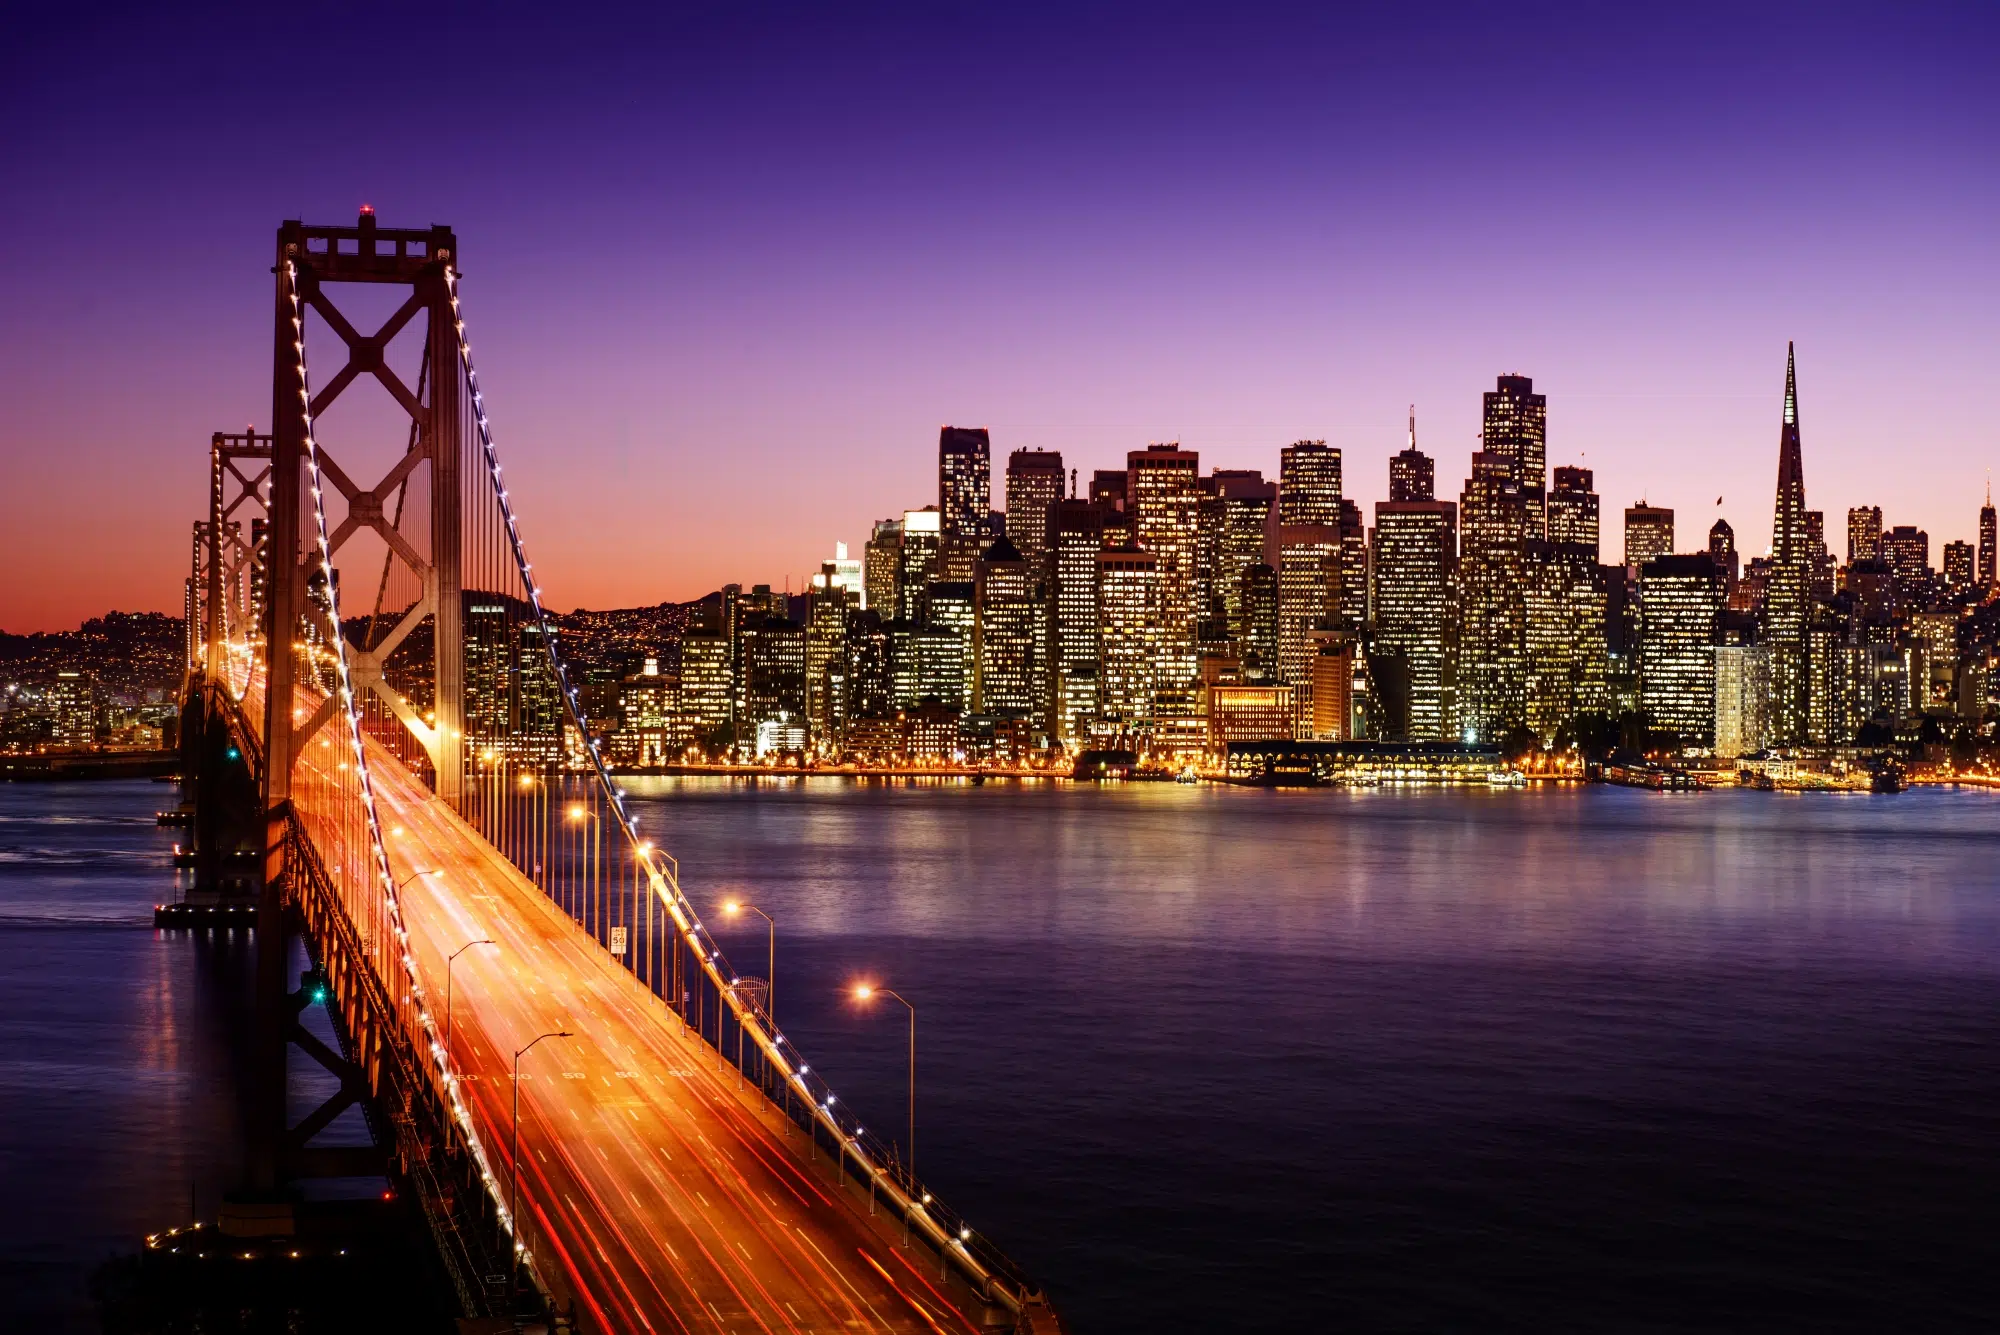 San Francisco - A City of Contrasts